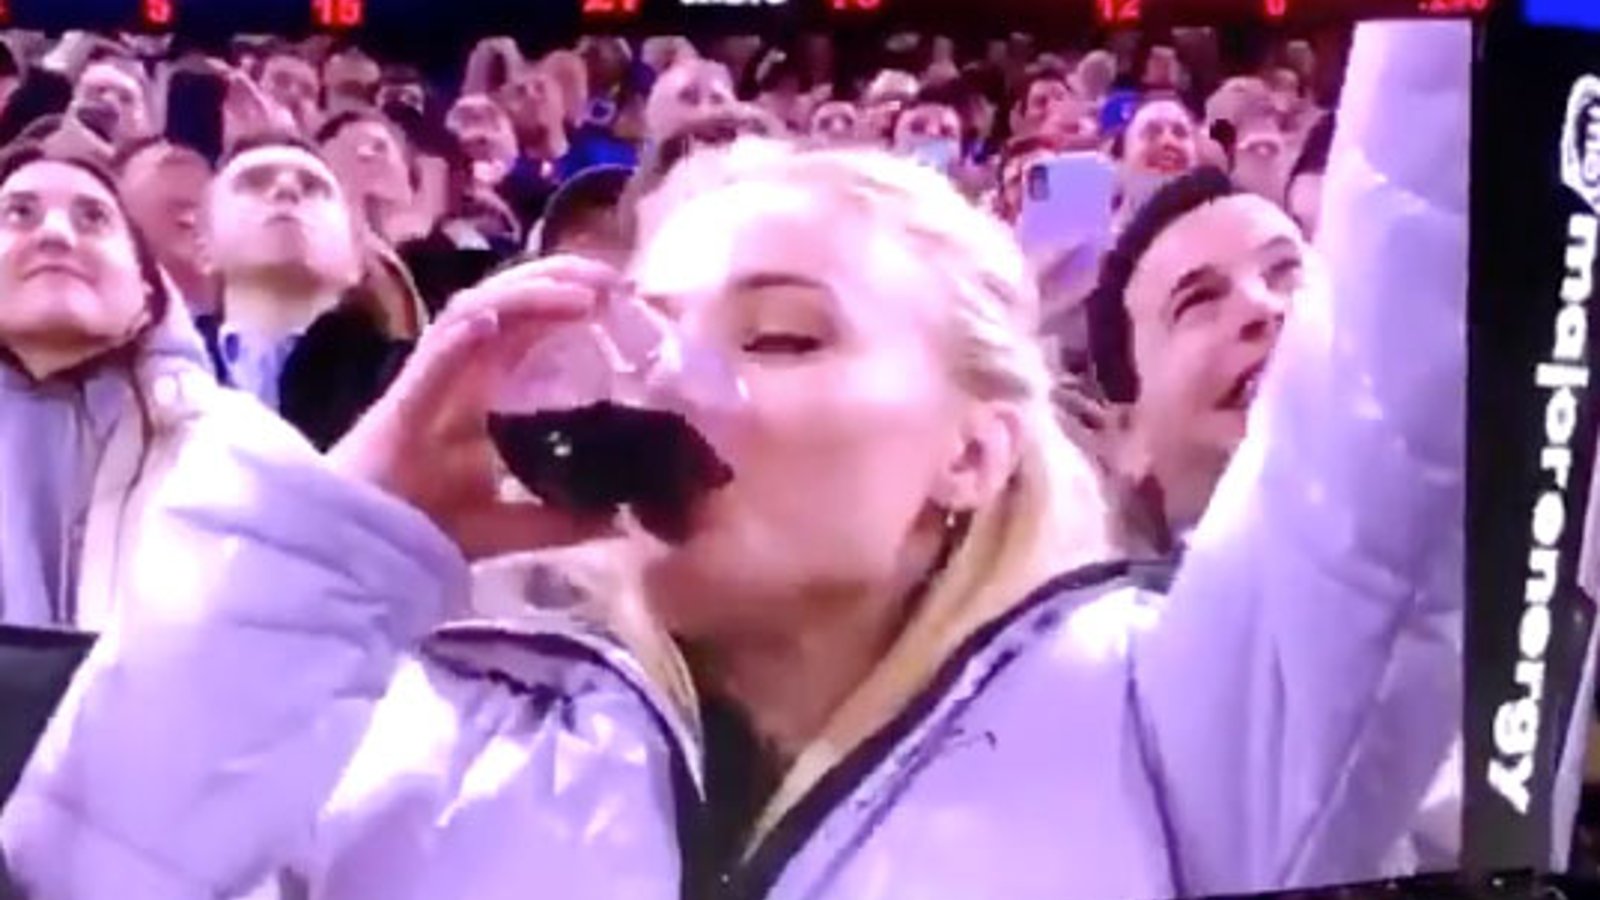 Game of Thrones star Sophie Turner chugs wine on Rangers' jumbotron! 